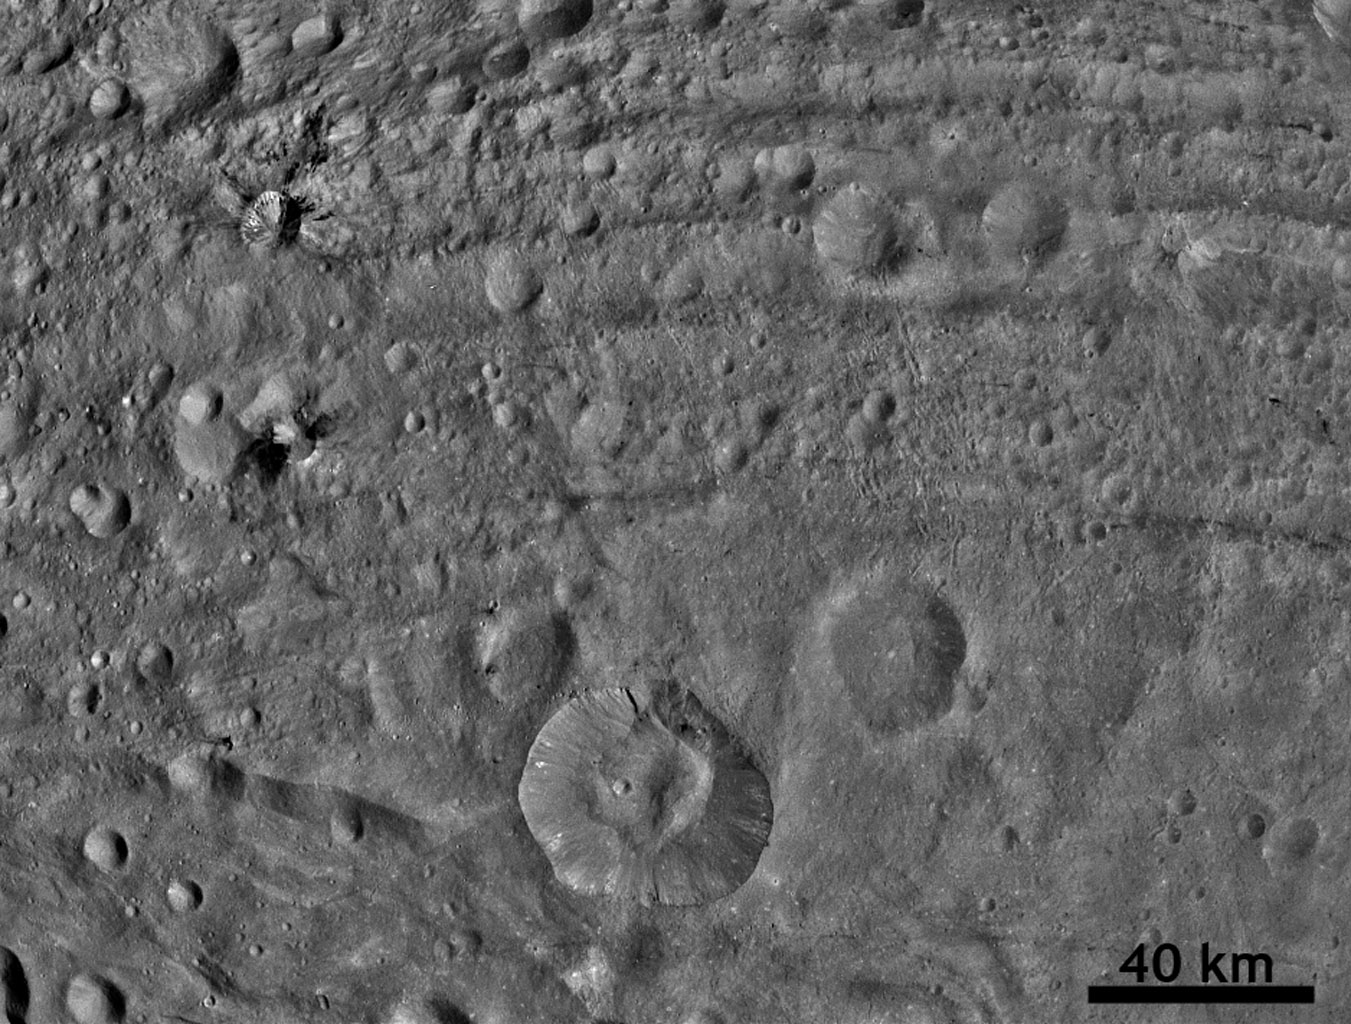 Worm-like Markings on Vesta's Surface